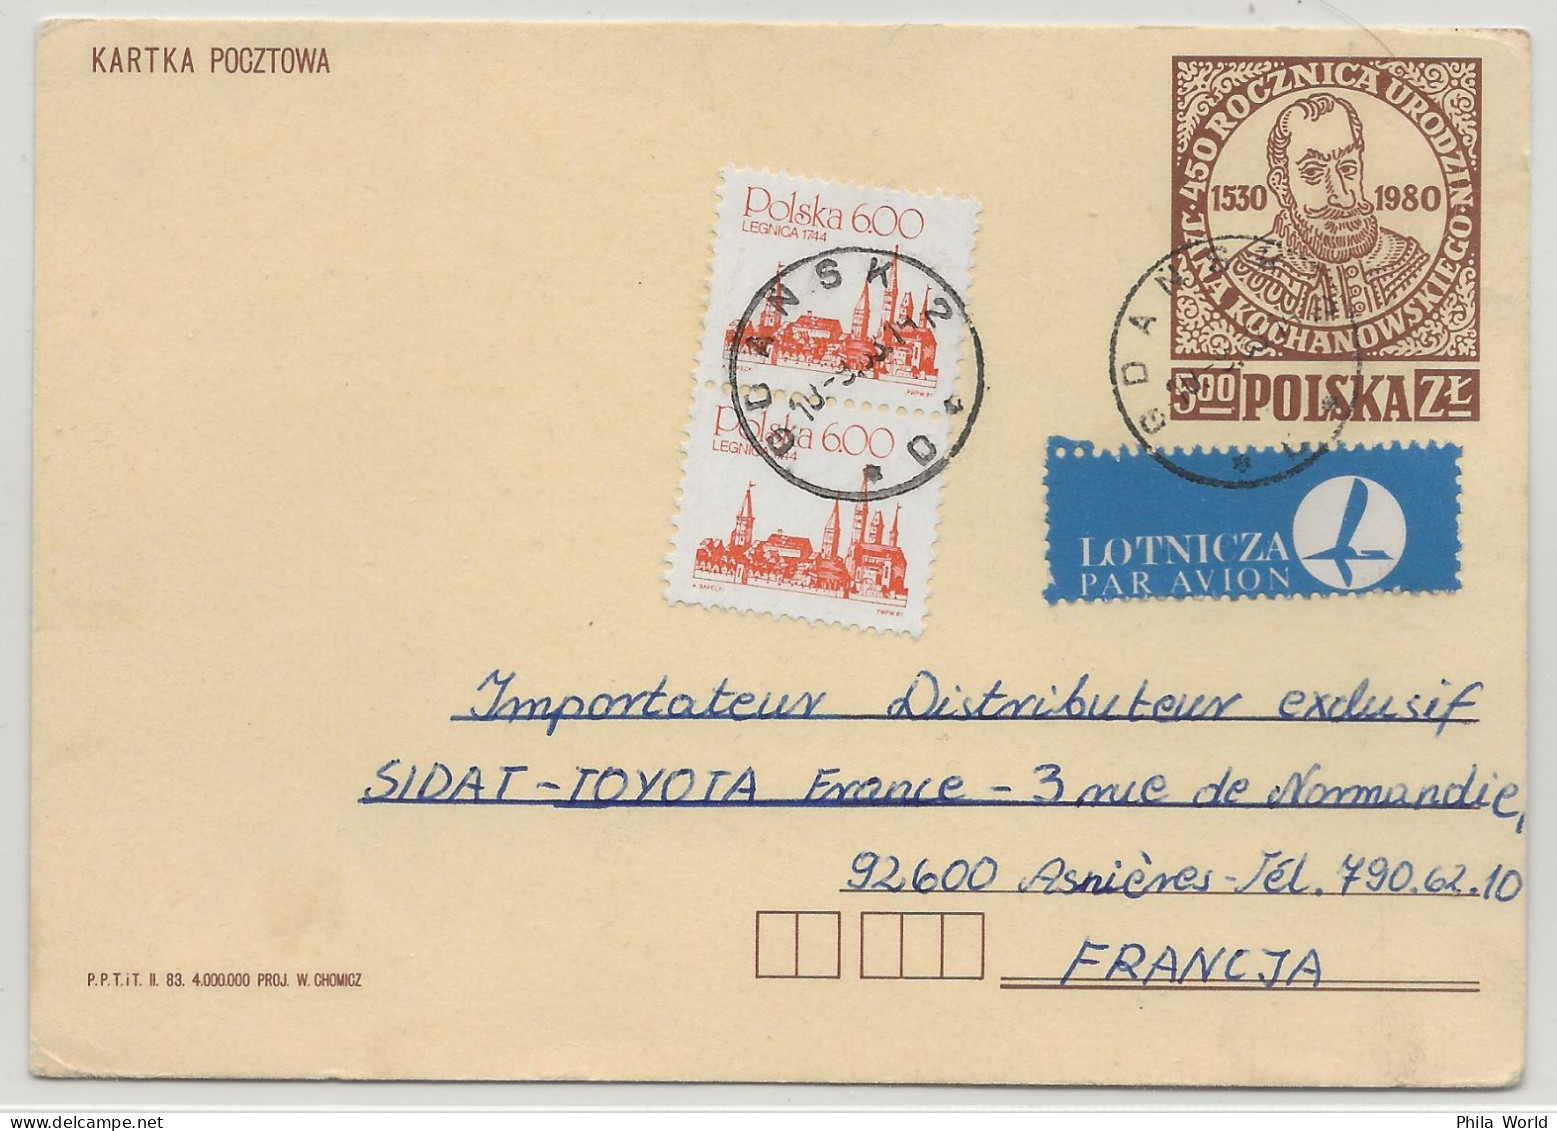 POLOGNE POLAND POLSKA 1980 Postal Stationery GDANSK 450 Rocznica Urodzin Kochanoskie Entier Postal - Enteros Postales